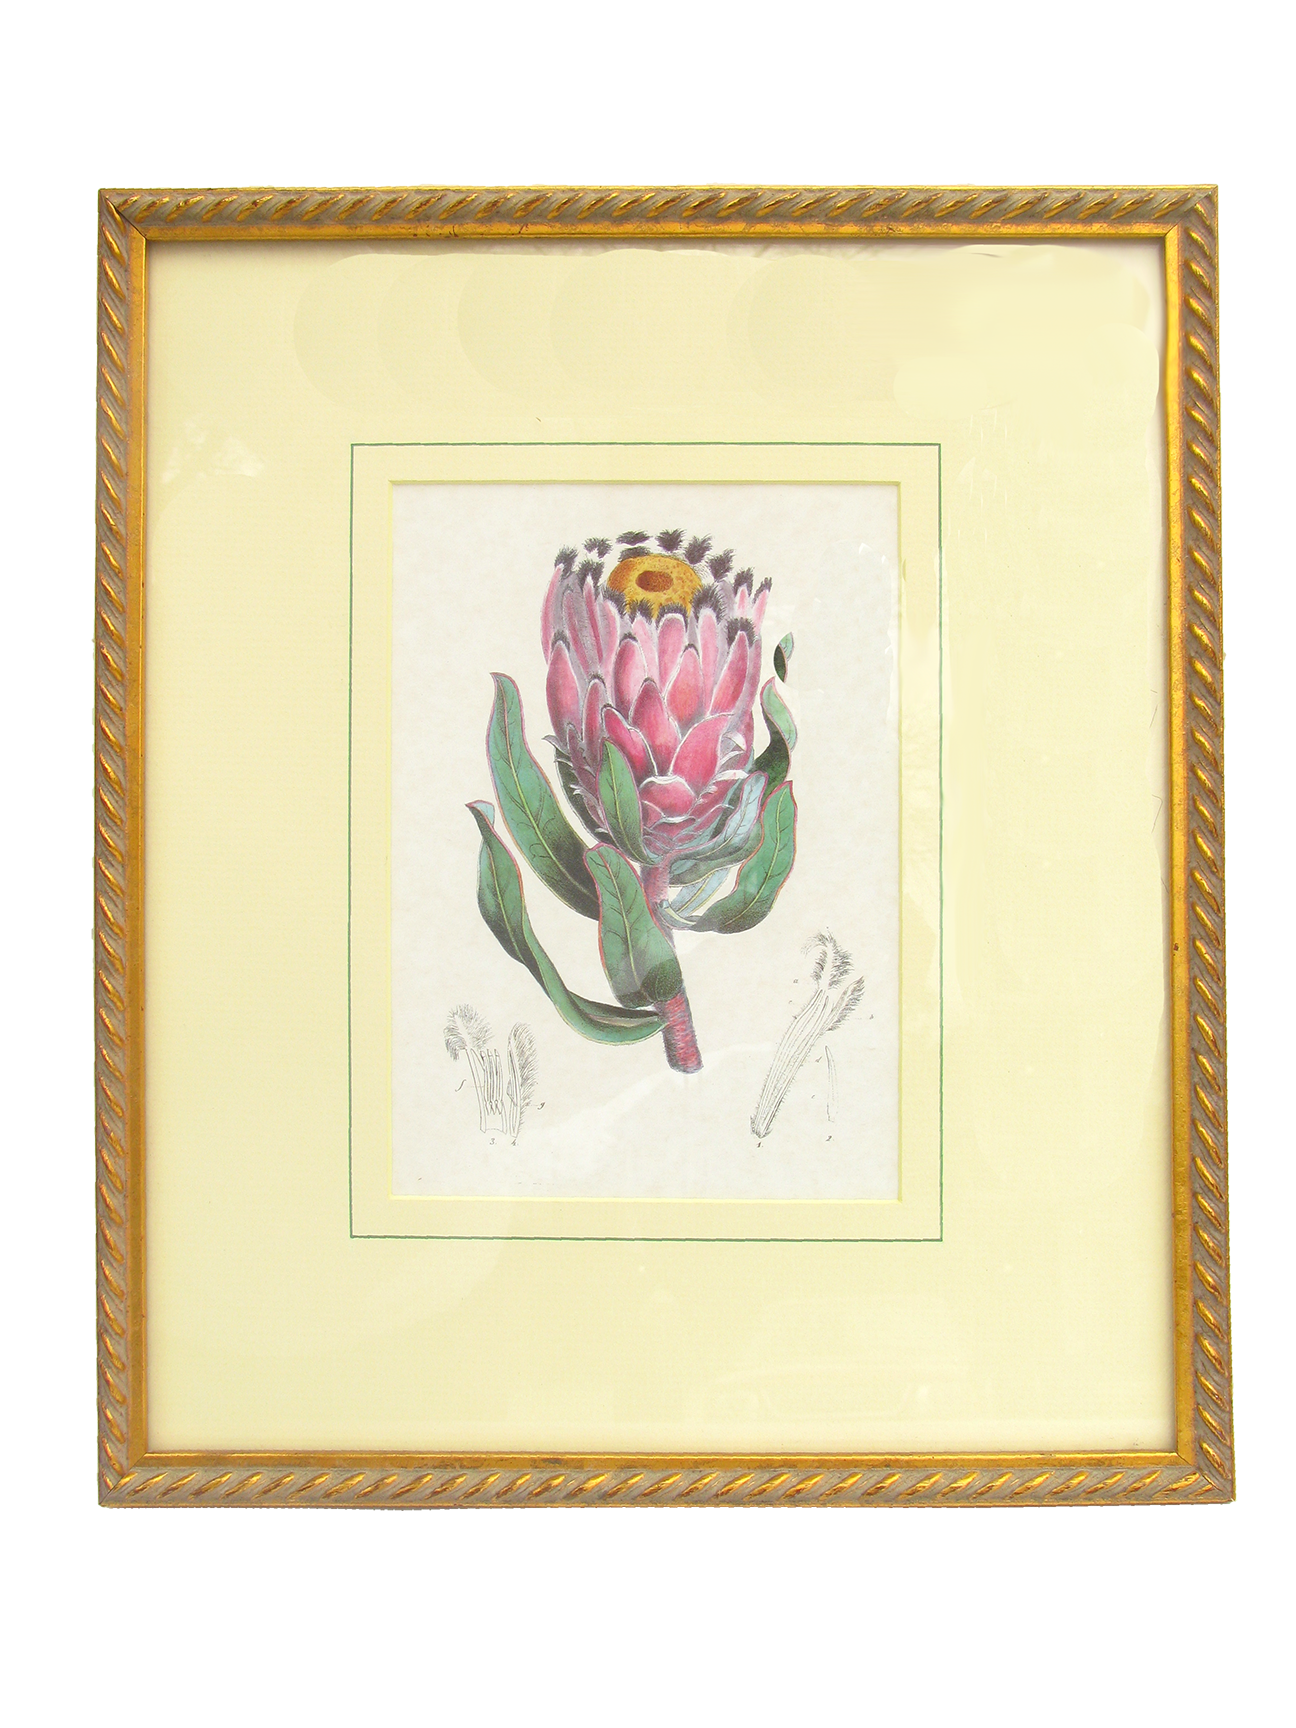 Vintage Botanical Engraving - Protea Flower, National Flower of South Africa